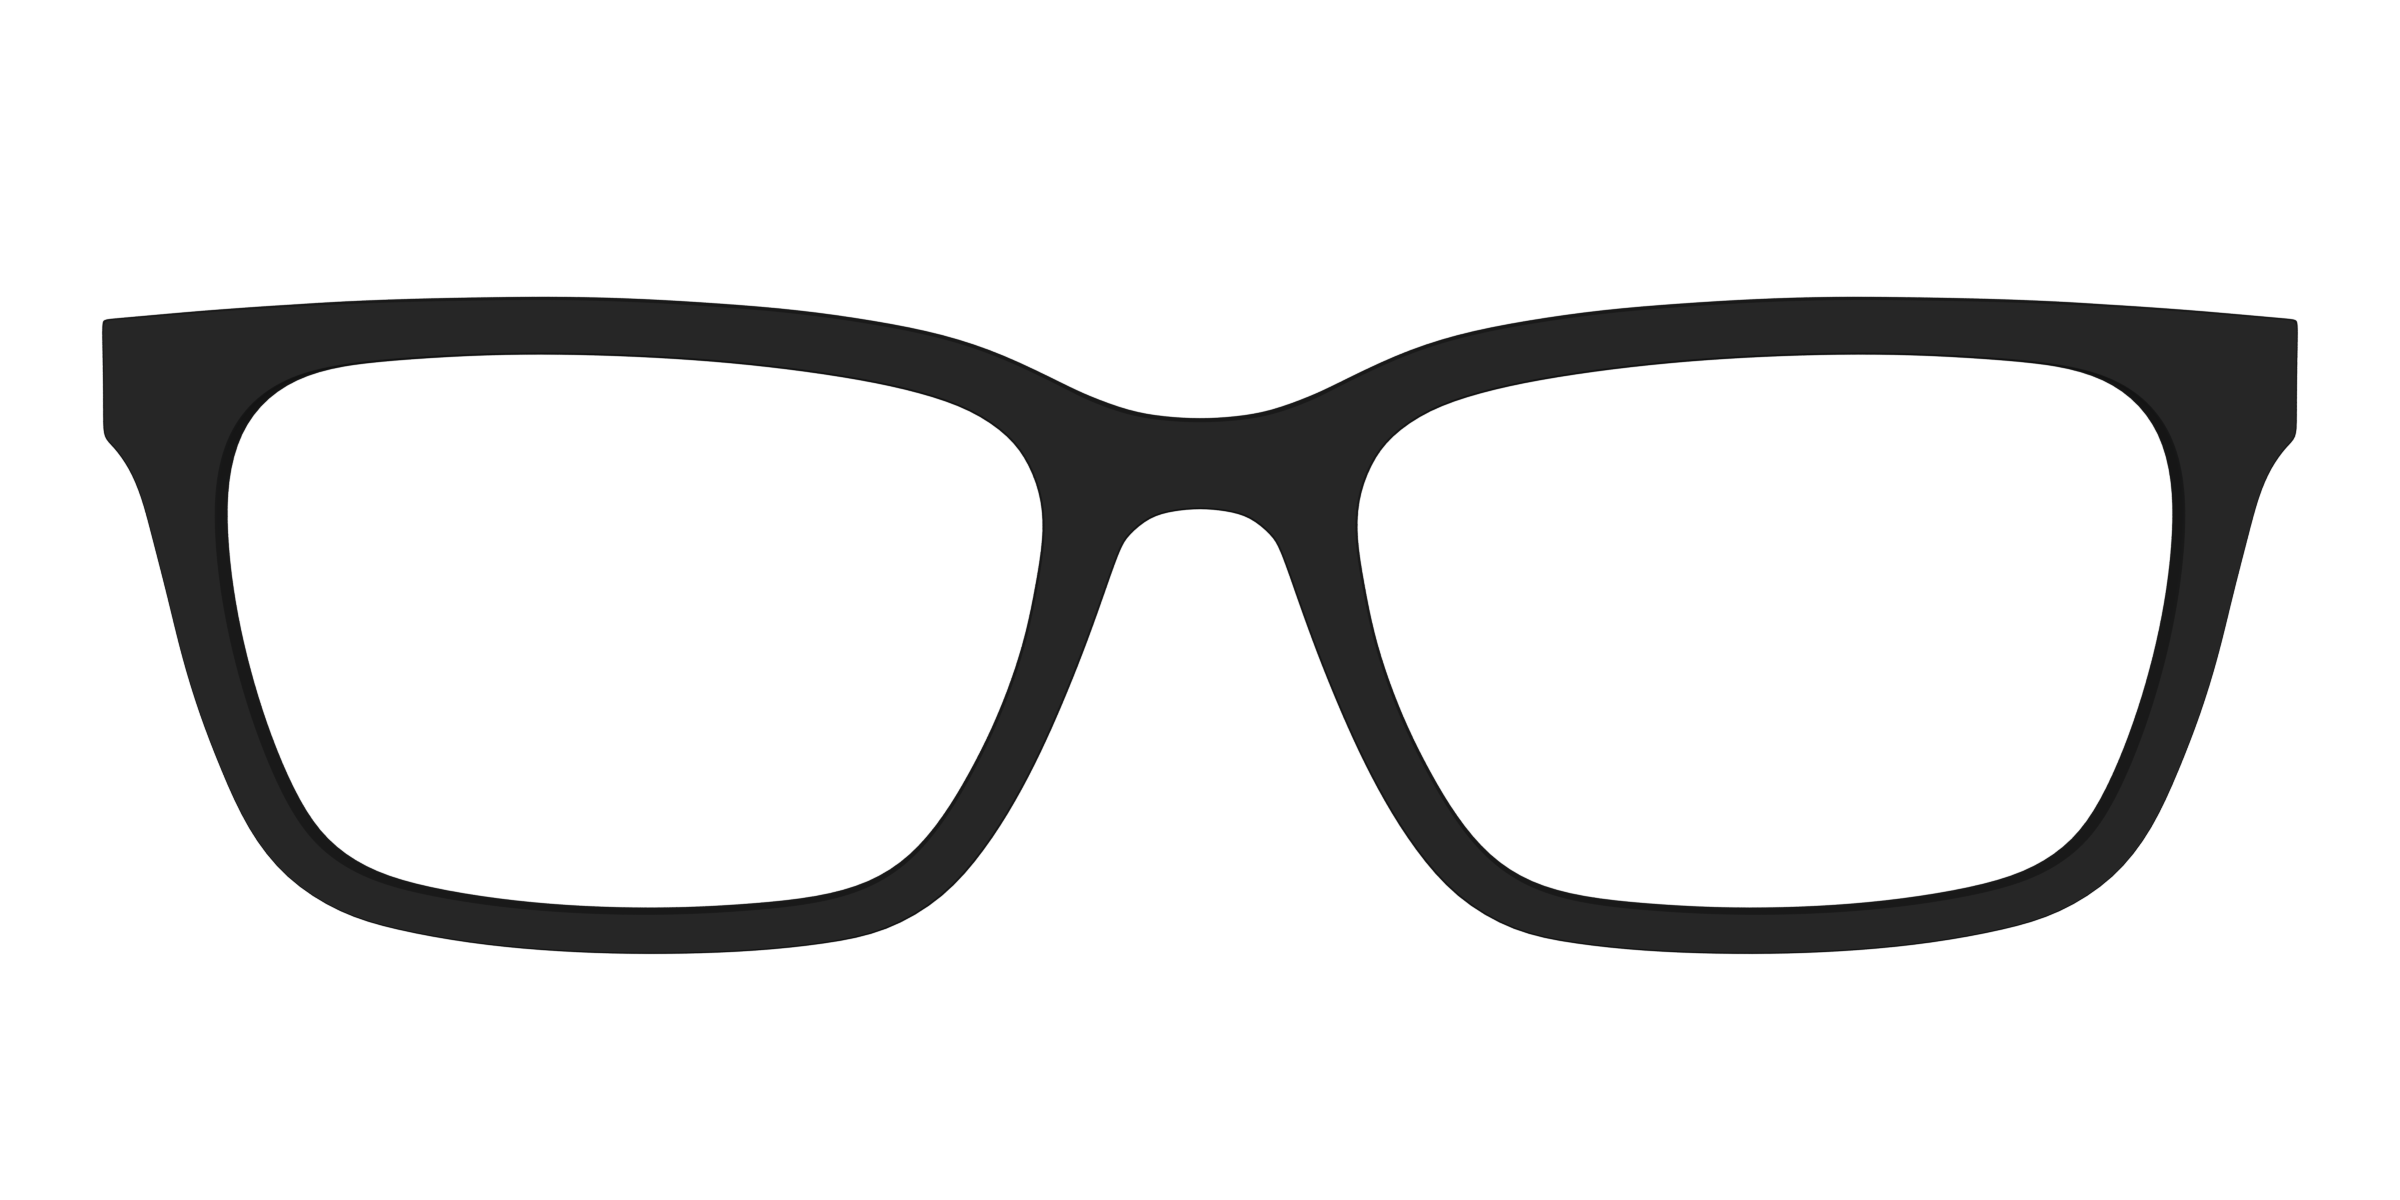 Premium Vector  Black sunglasses with dark glass on white background.